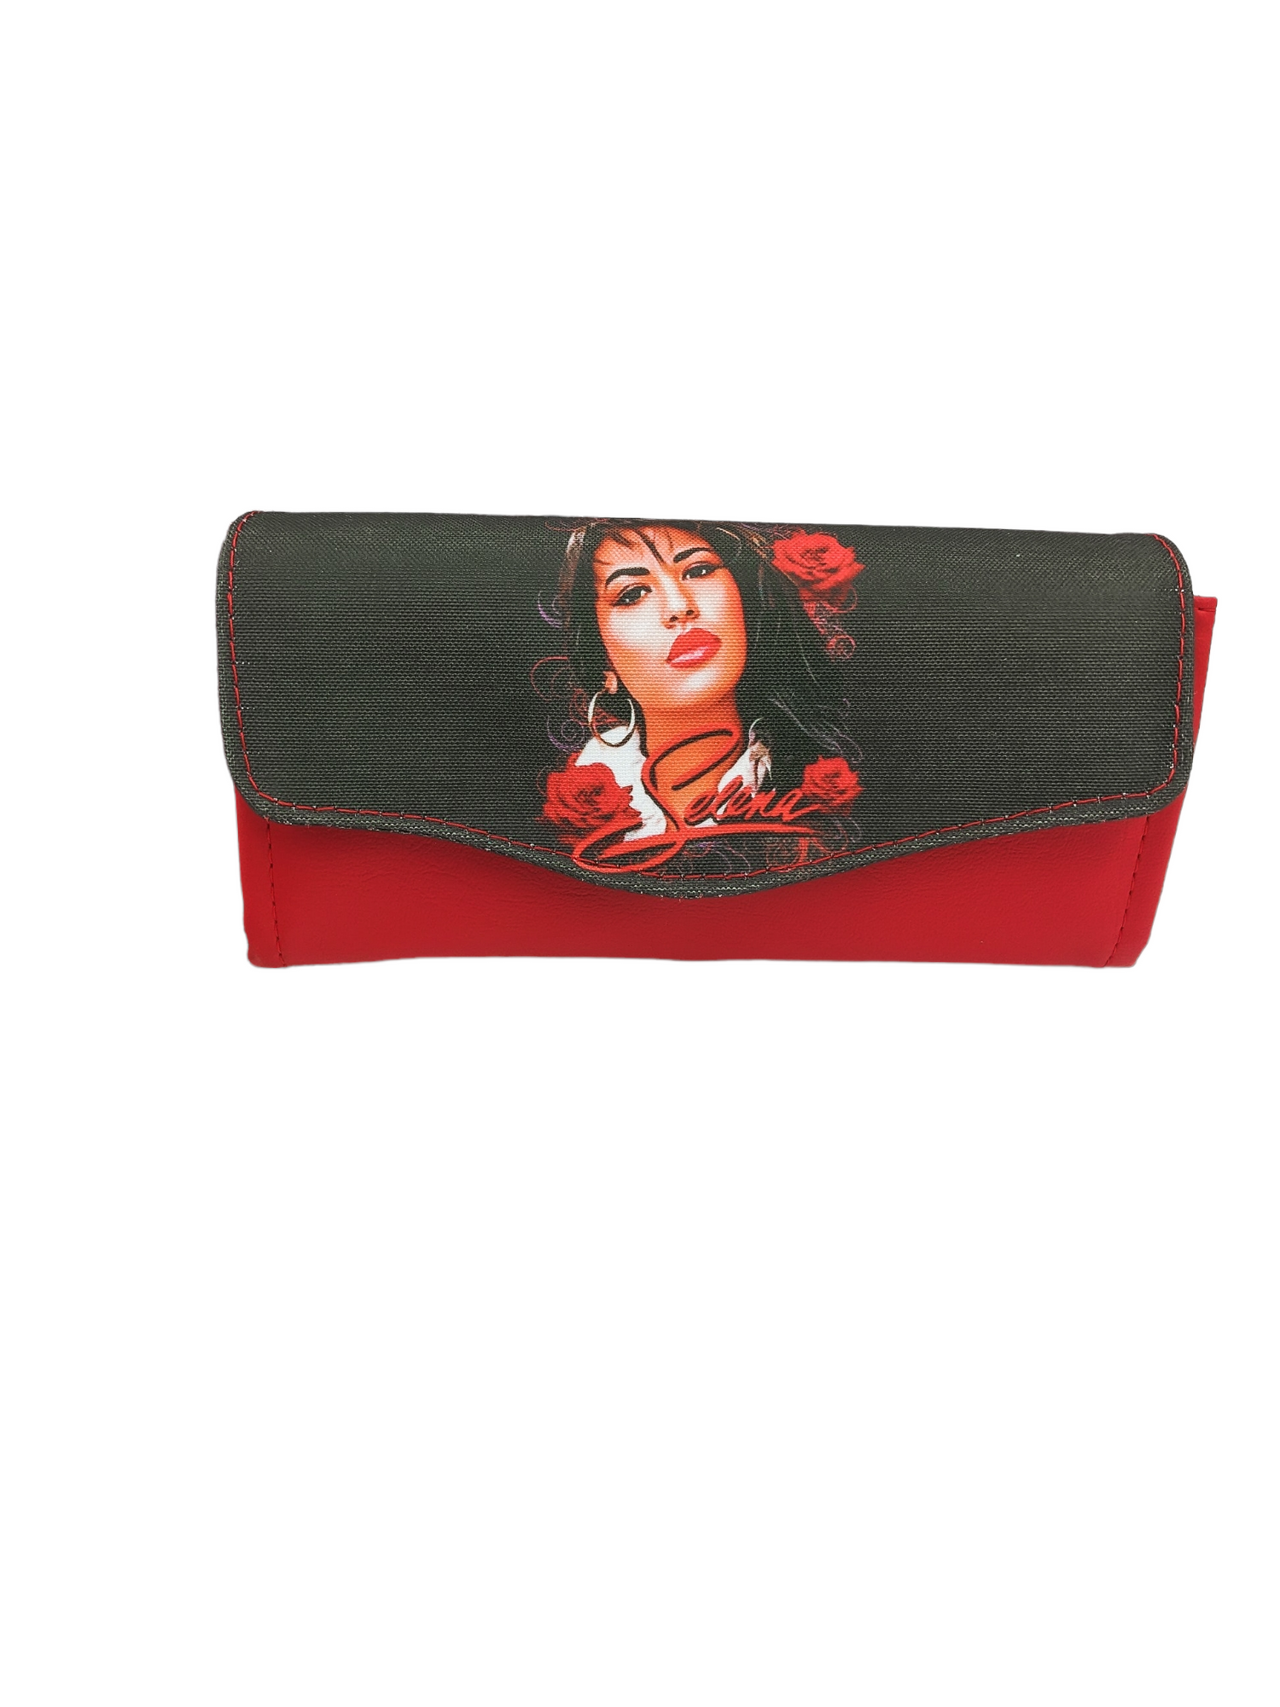 Selena Red Roses Wallet